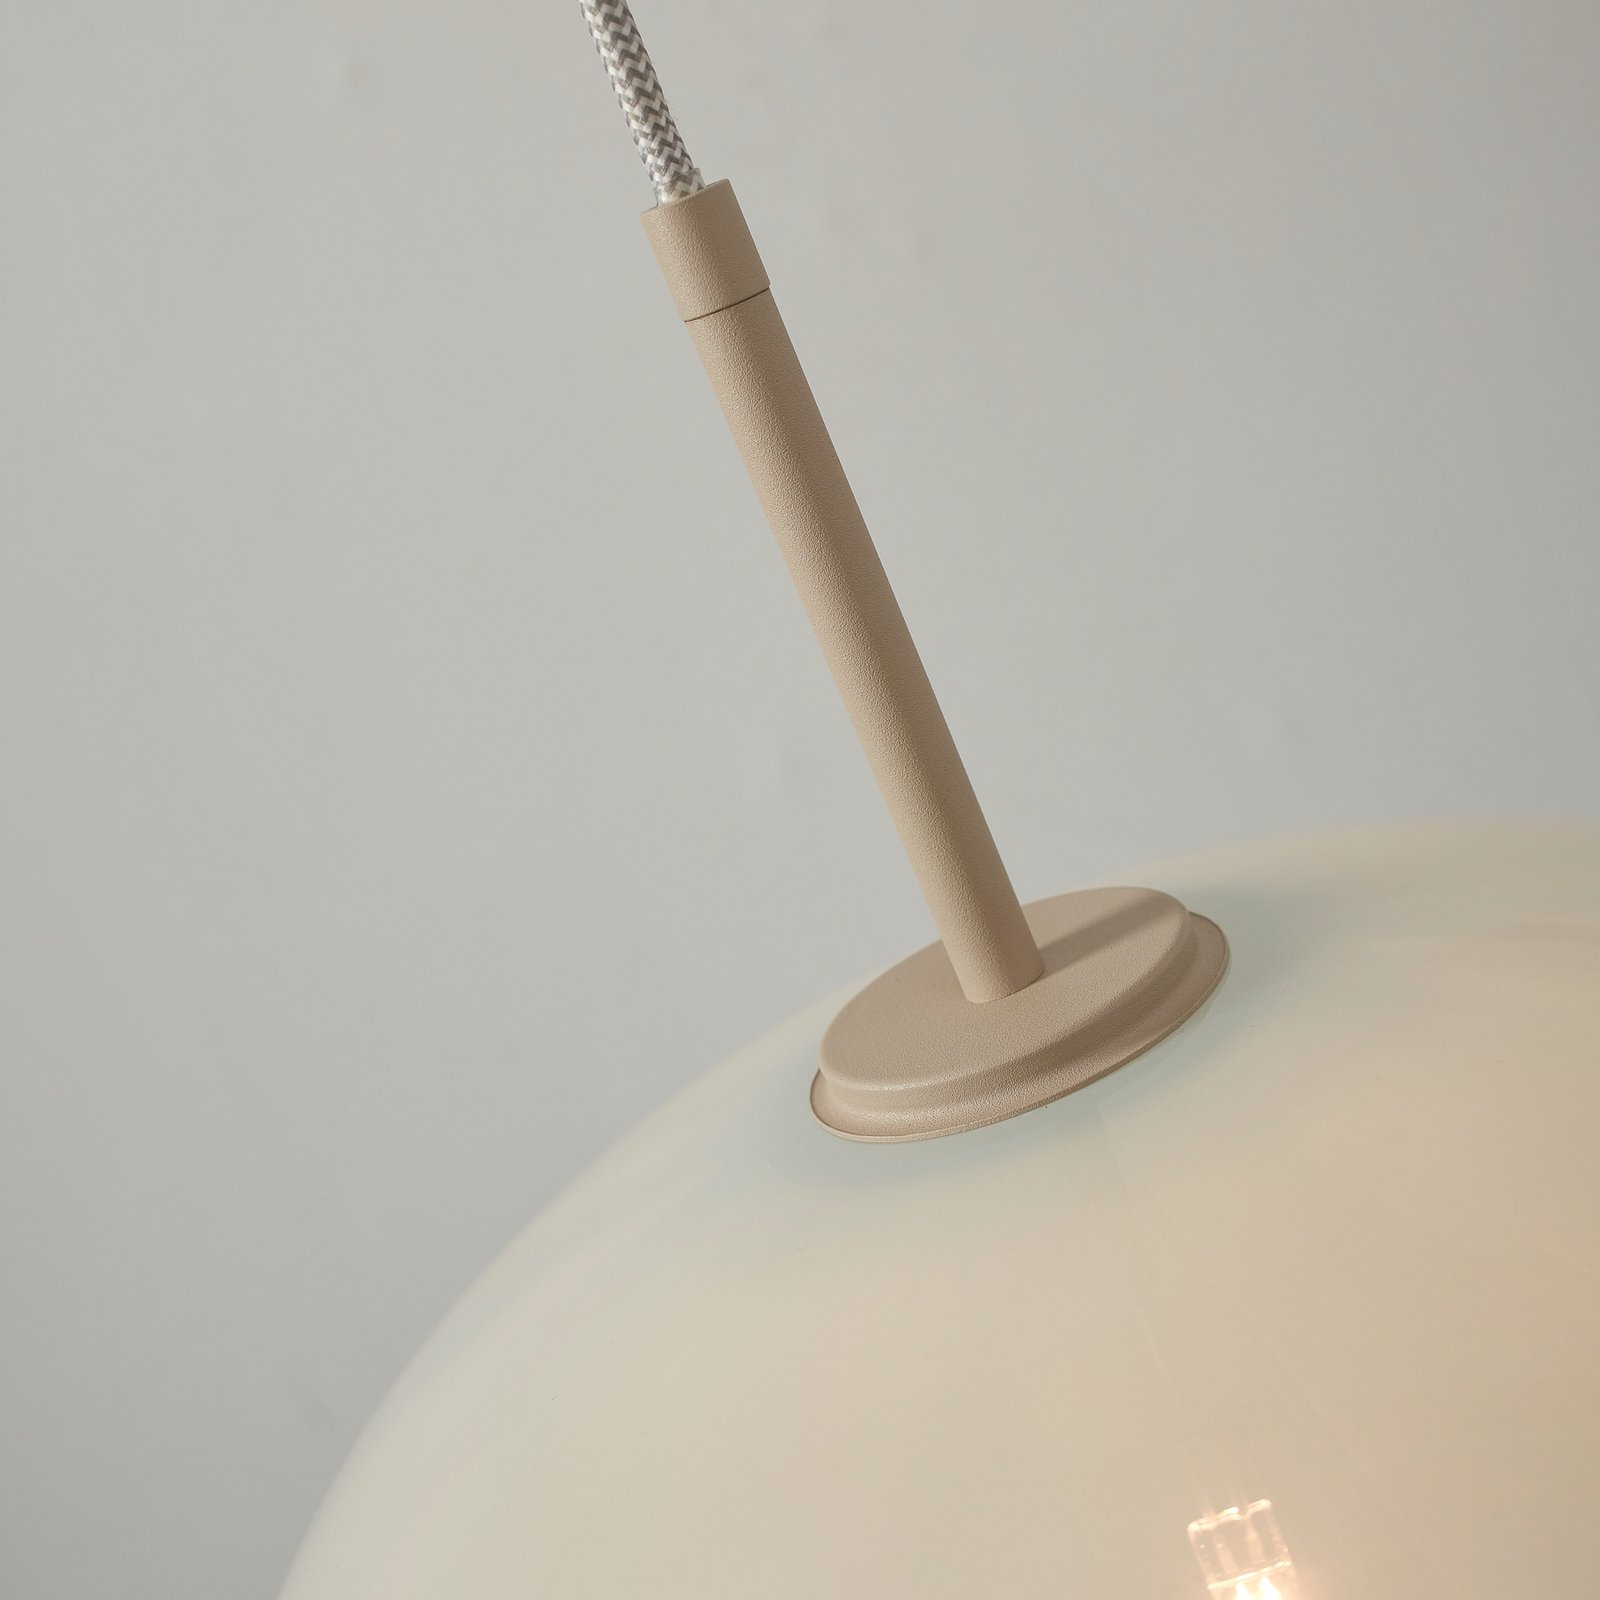 Het gaat om RoMi hanglamp Bologna, melkwit, 1-lamp